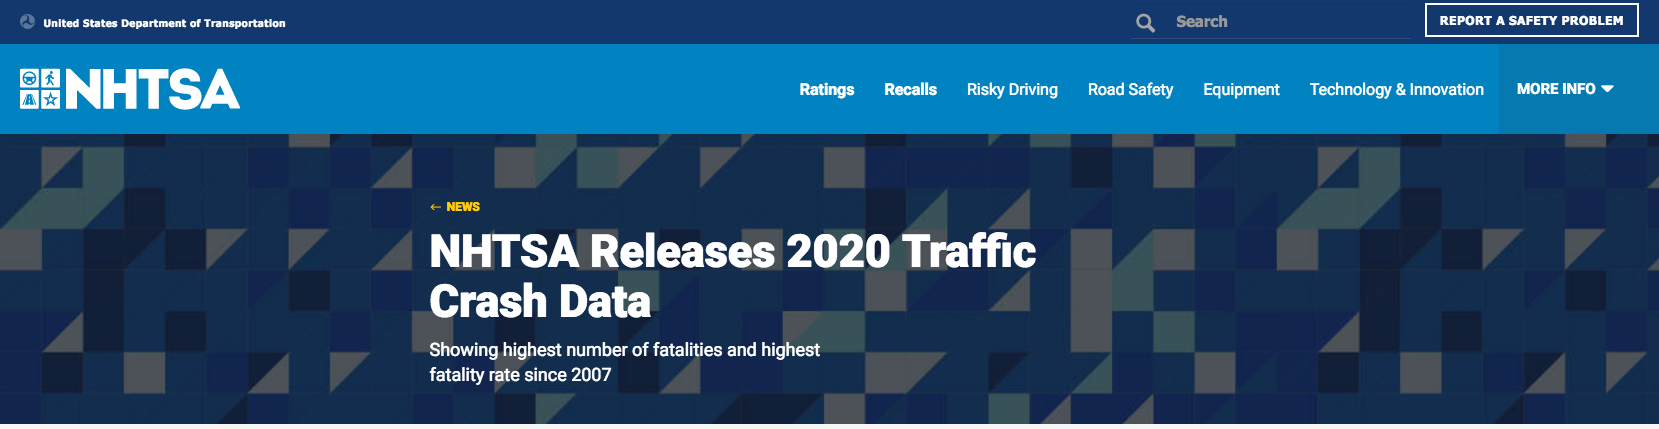 NHTSA-Releases-2020-Traffic-Crash-Fatality-Data-FARS-NHTSA